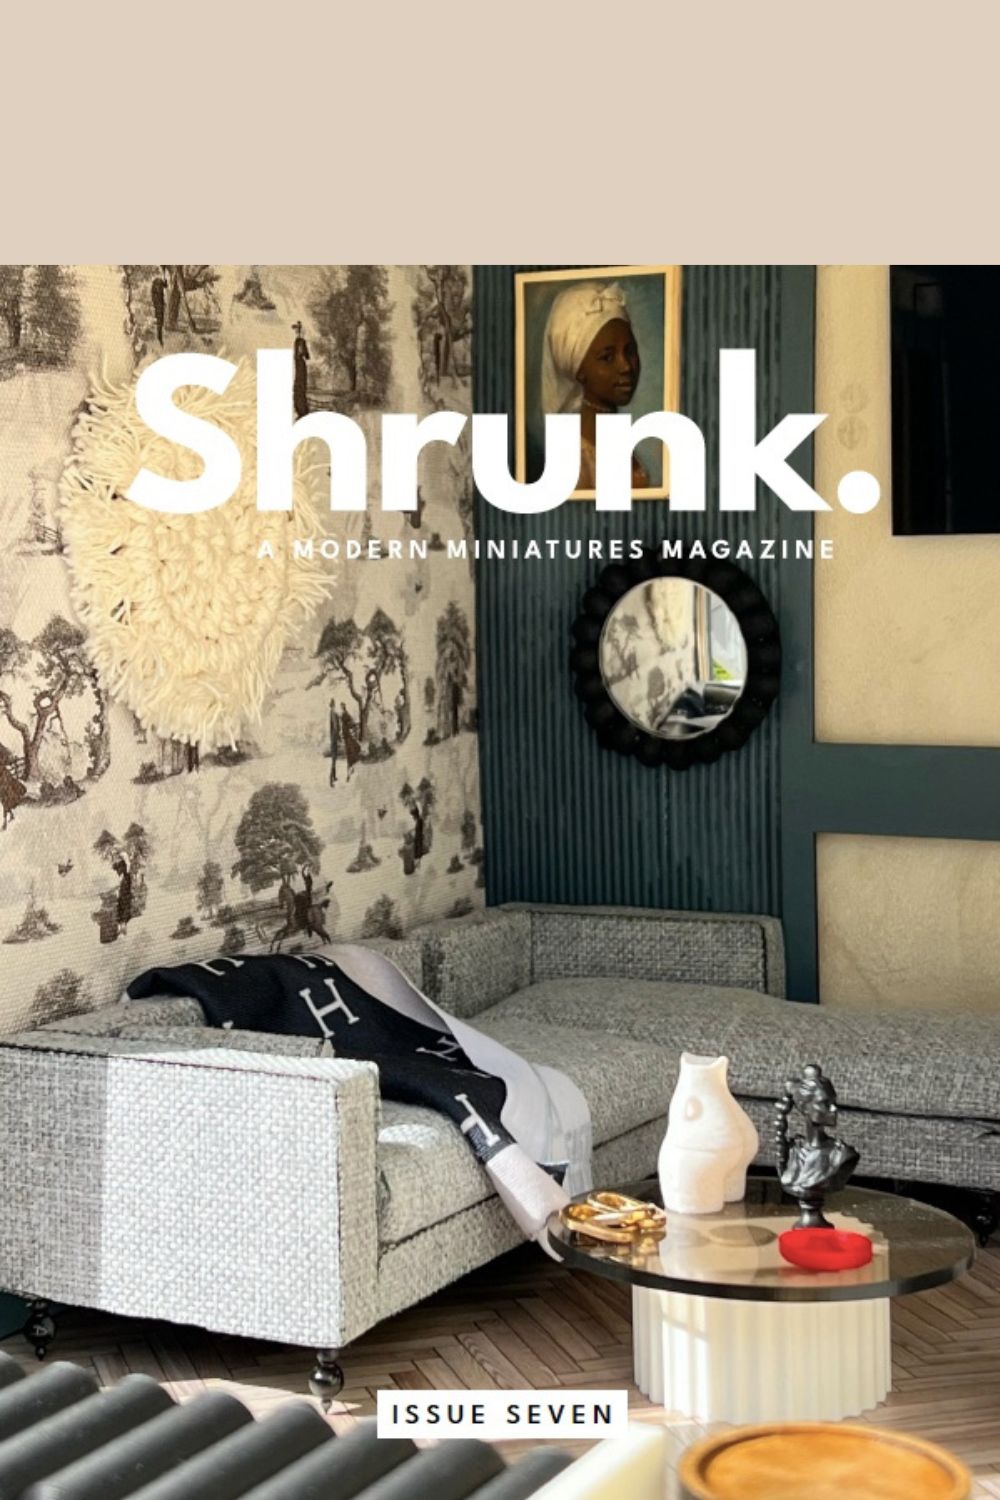 Shrunk Magazine Issue 7 cover